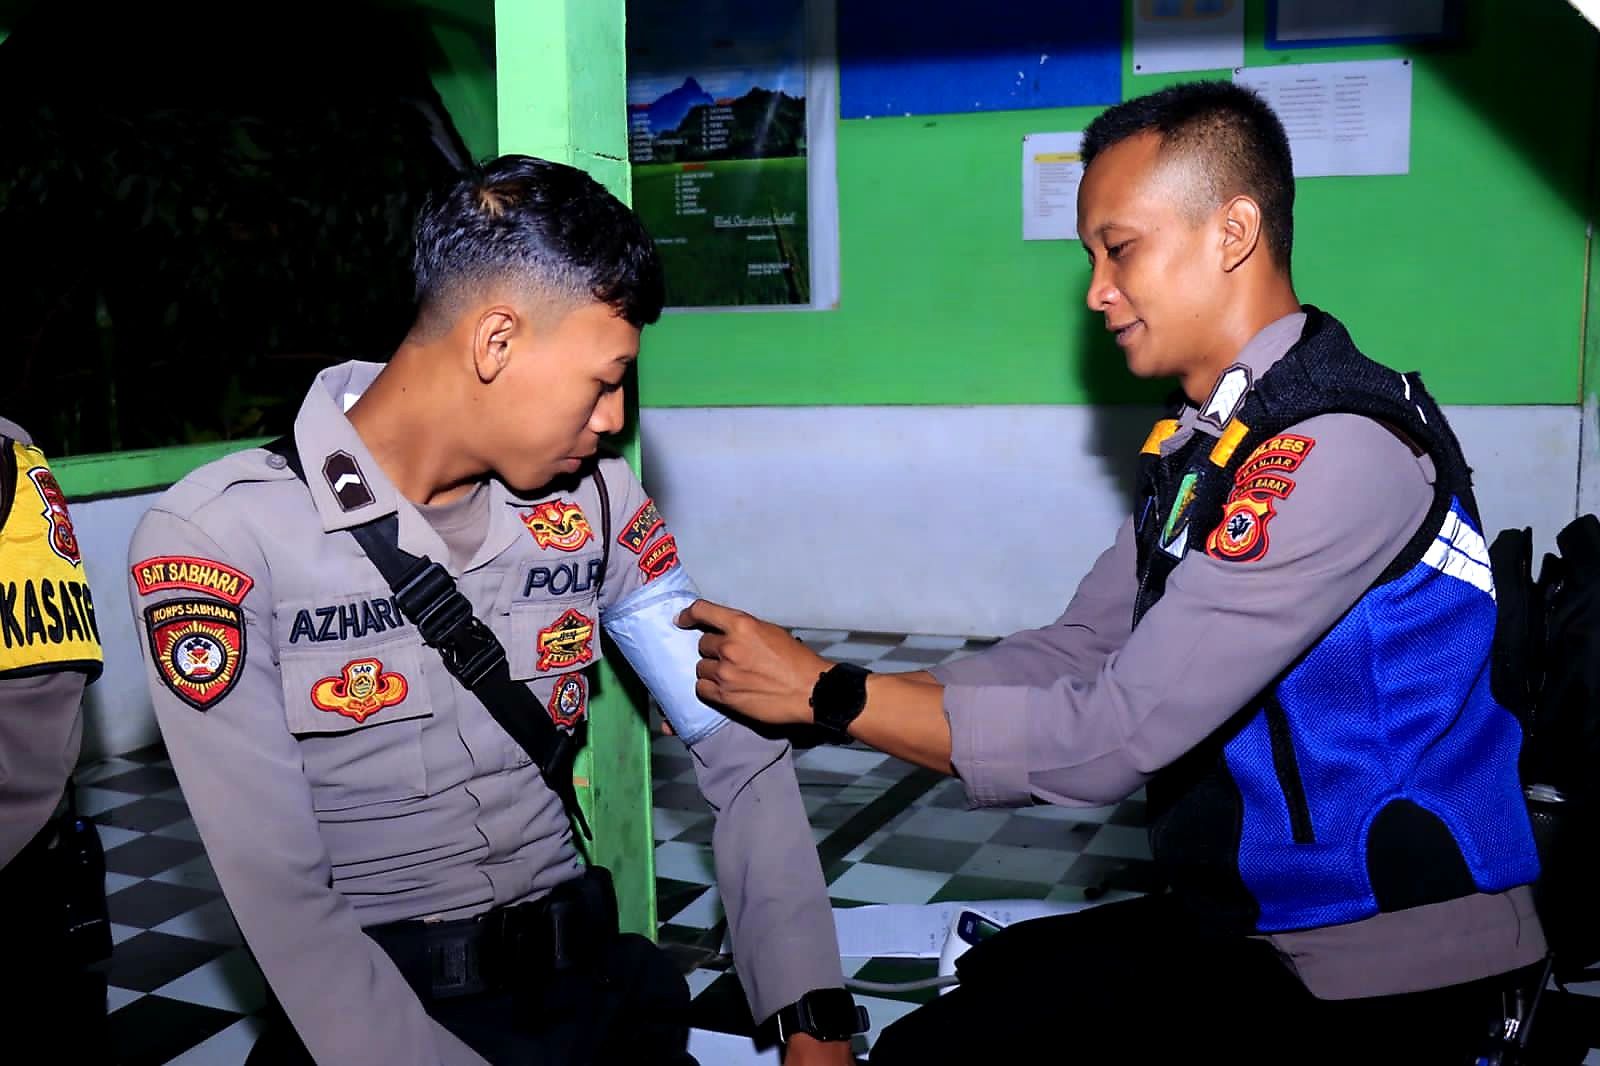 Dokes Polres Banjar belerja keliling melayani anggota Polri yang bertugas malam hari.